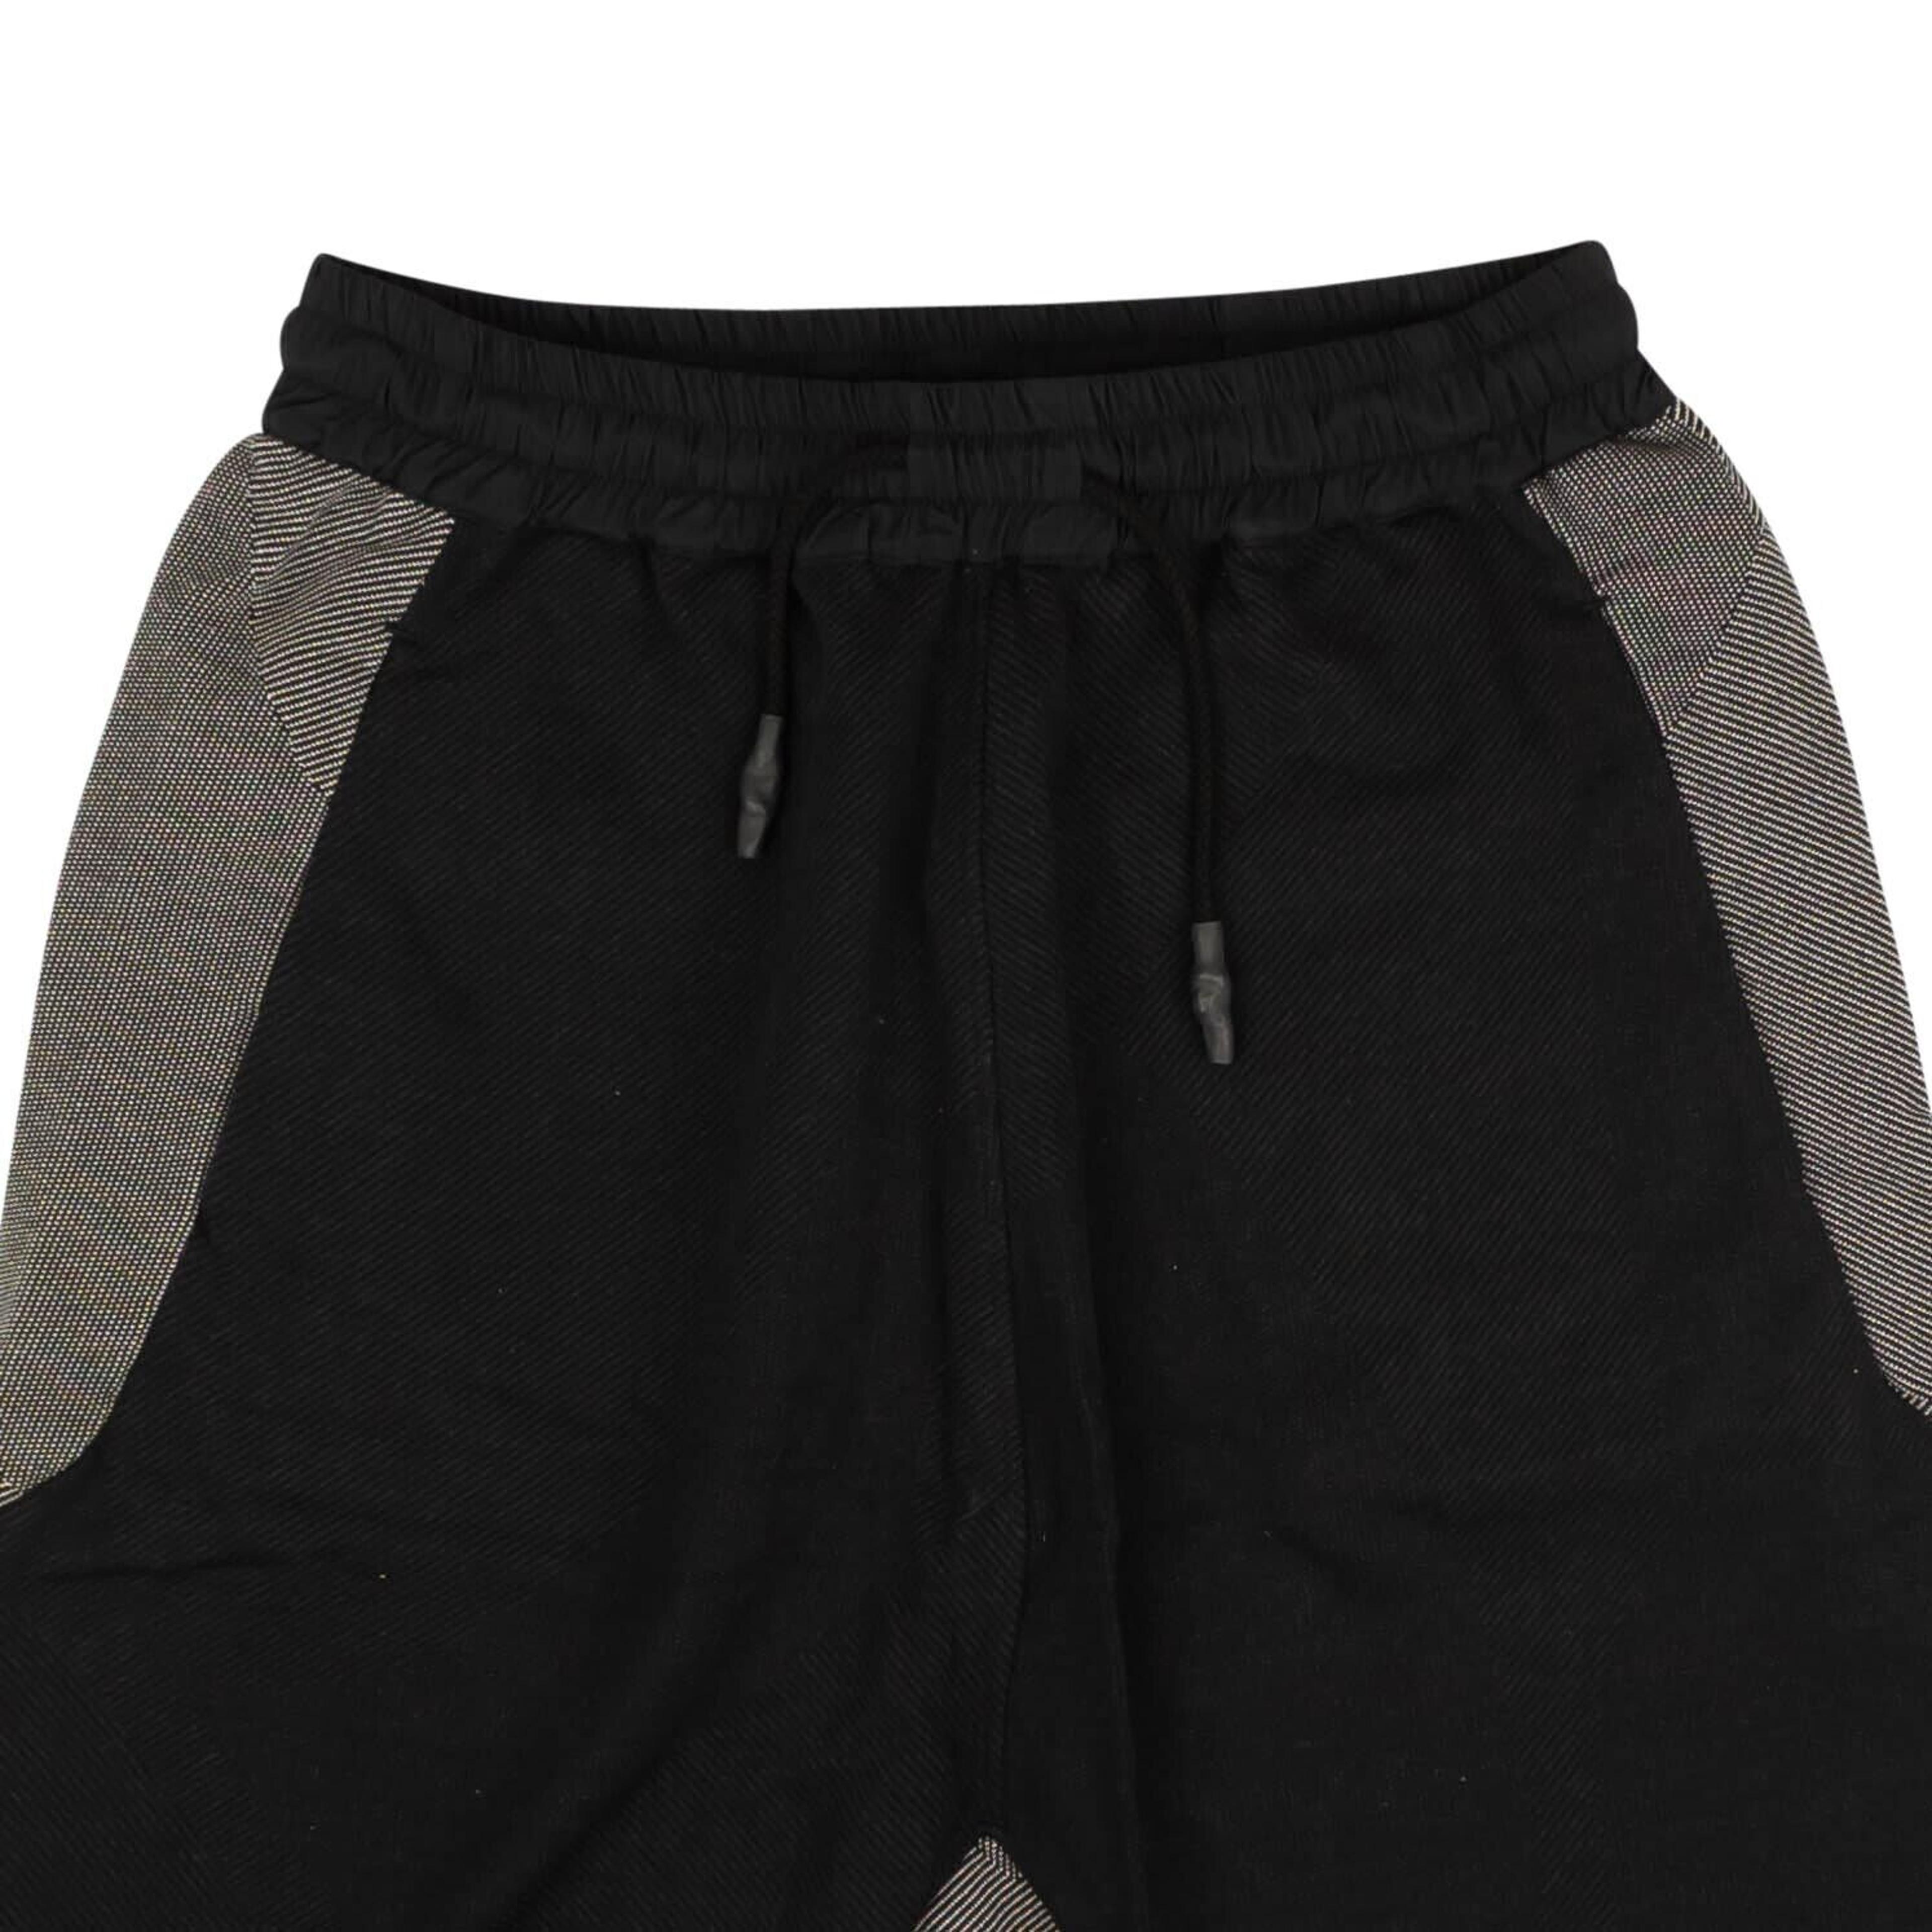 Alternate View 1 of Black Woven B1 Shorts